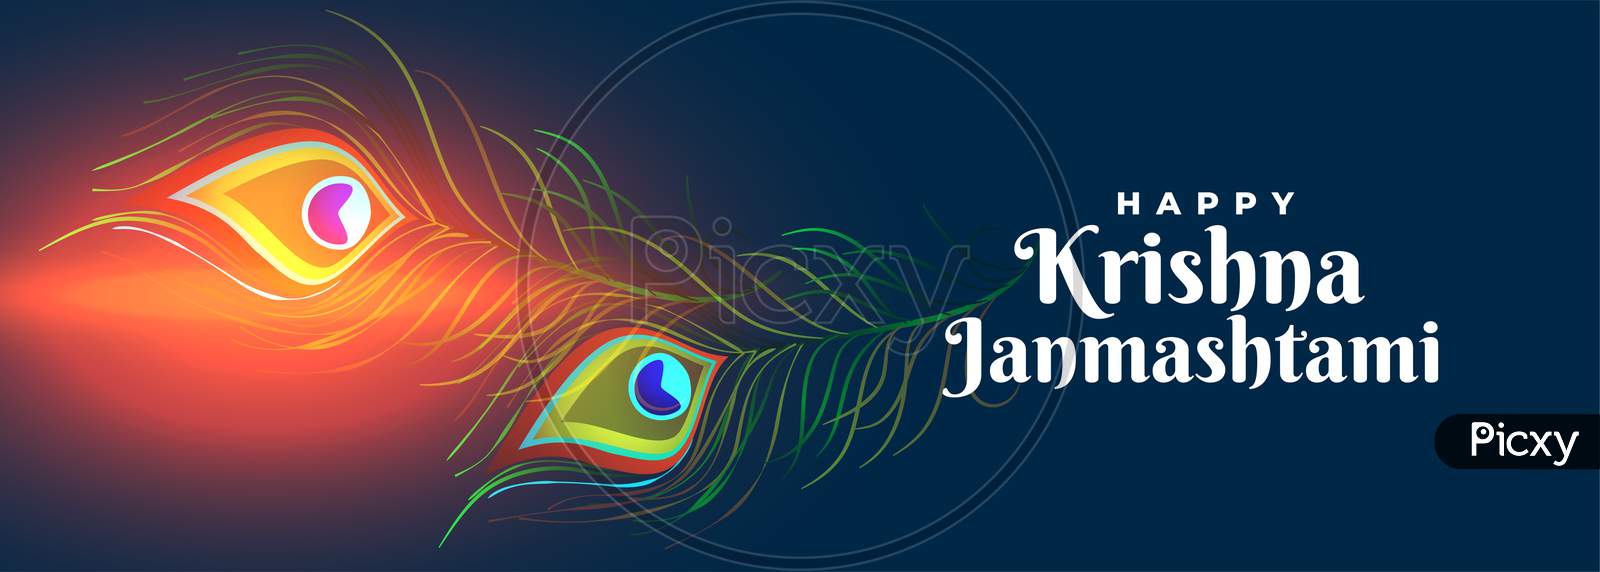 Happy Krishna Janmashtami Festival Banner With Peacock Feathers